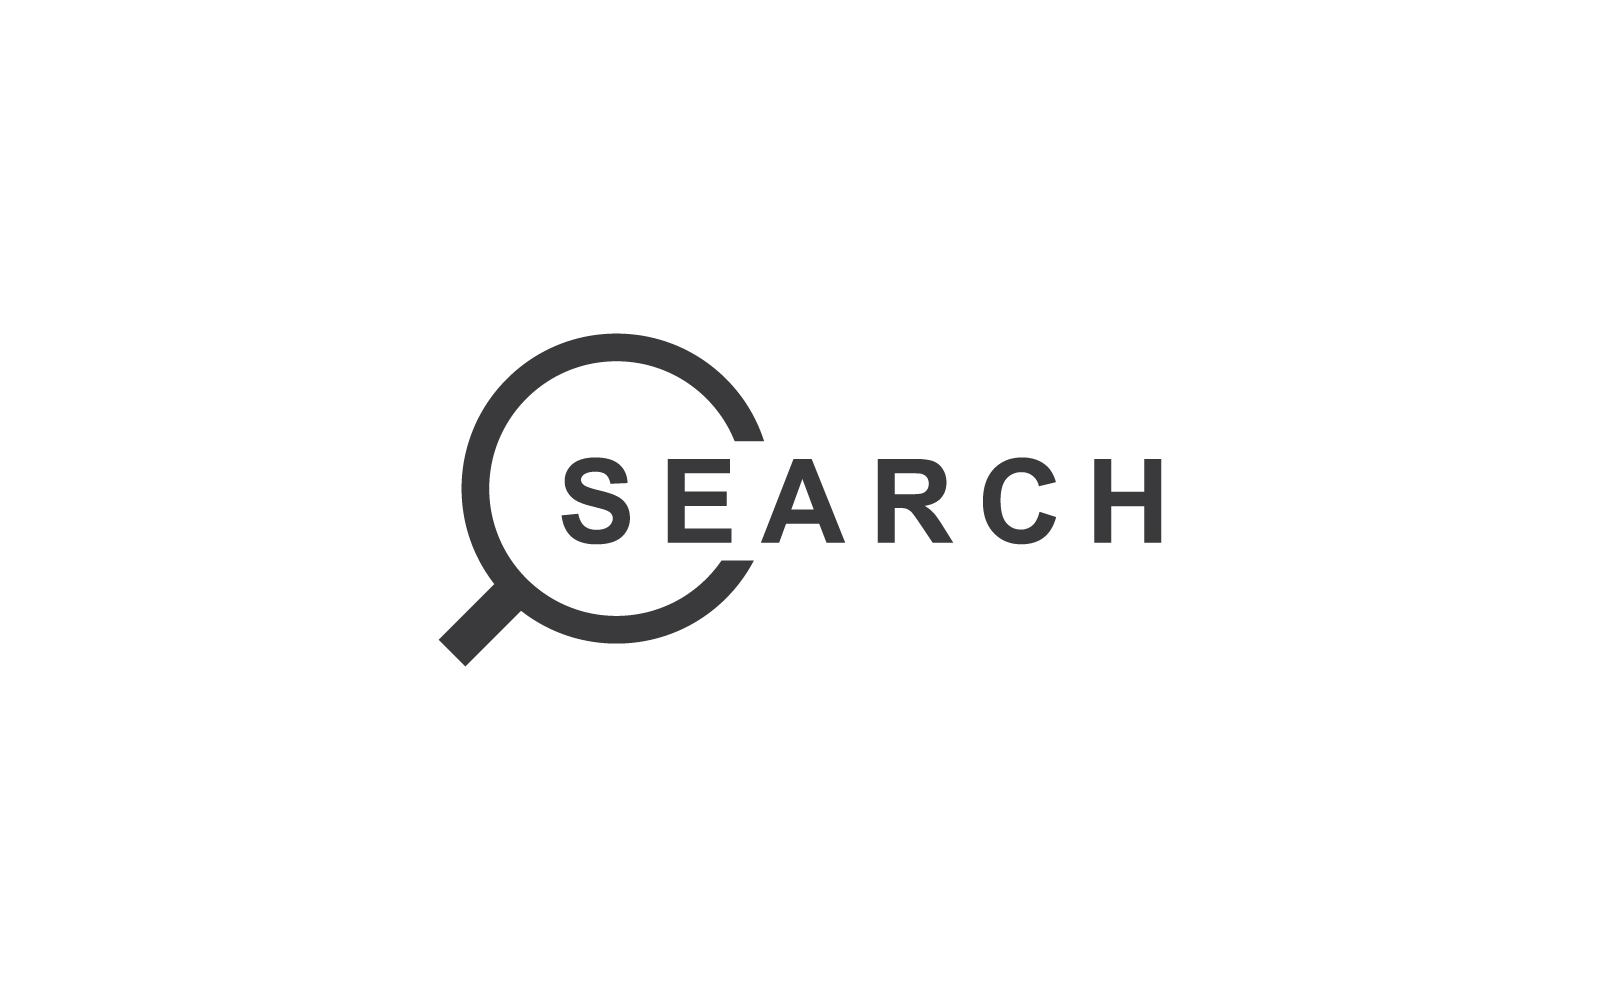 Search engine illustration logo vector flat design template